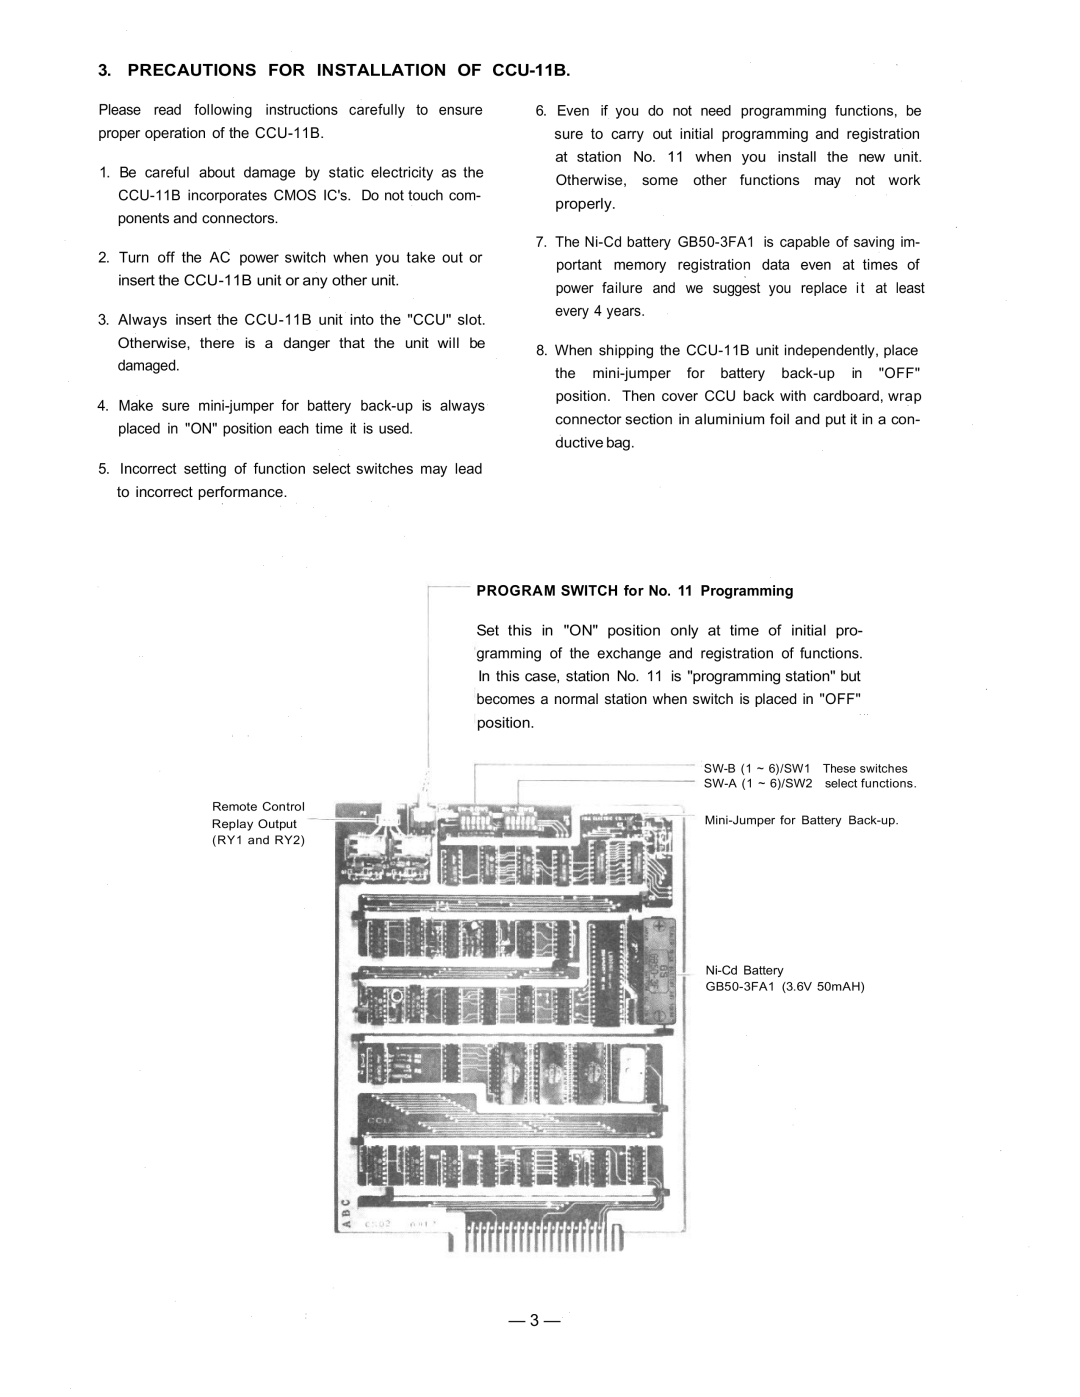 Vizio manual PRECAUTIONS FOR INSTALLATION OF CCU-11B, PROGRAM SWITCH for No. 11 Programming 